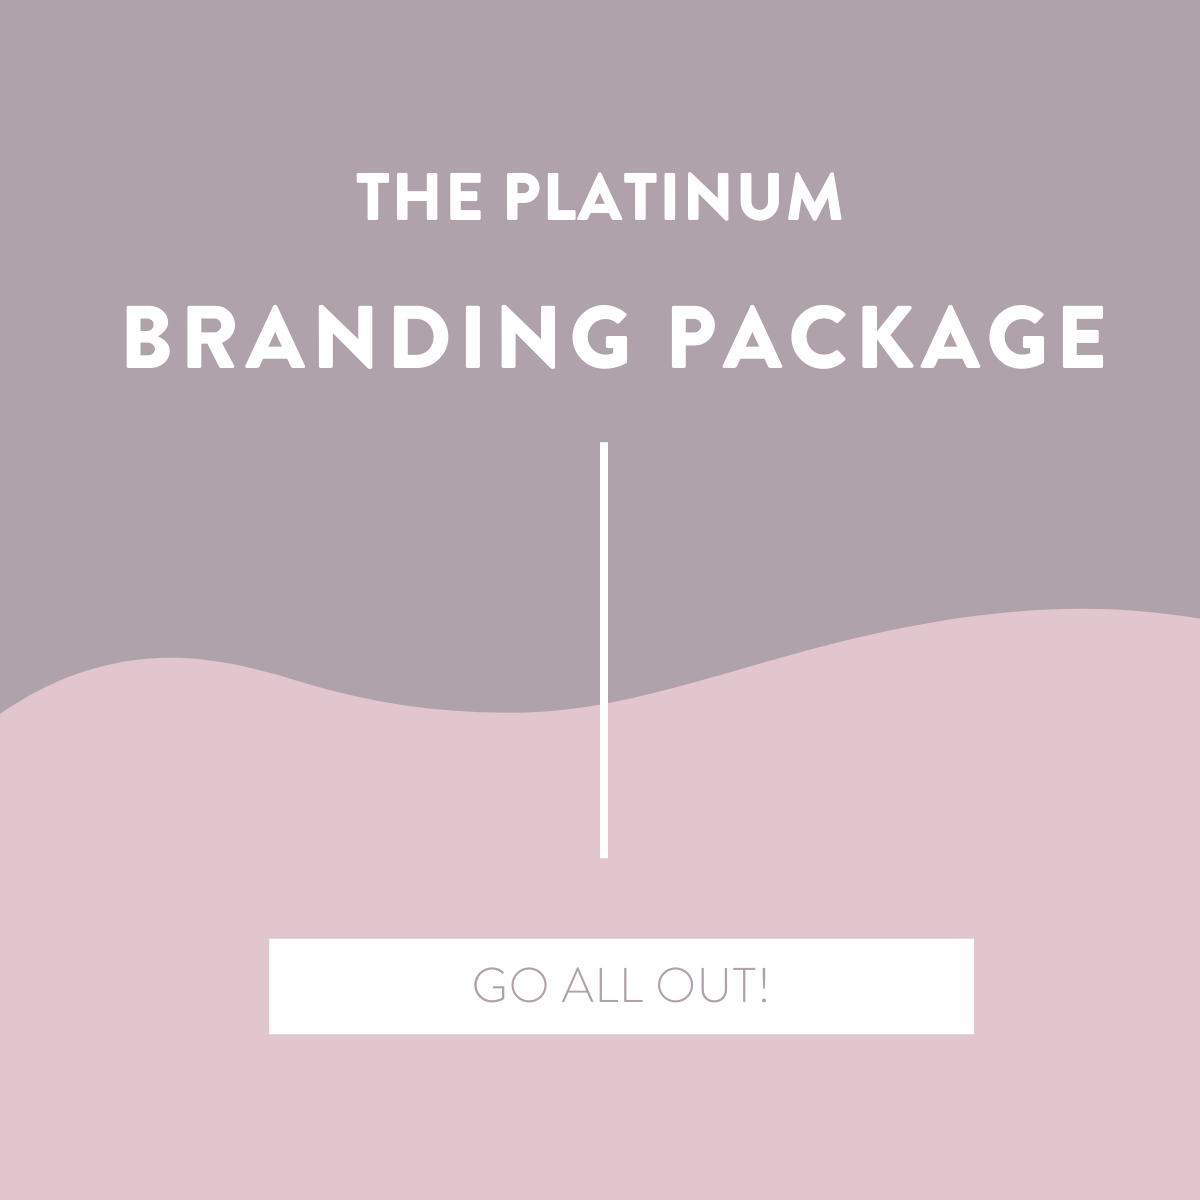 The Platinum Branding Package